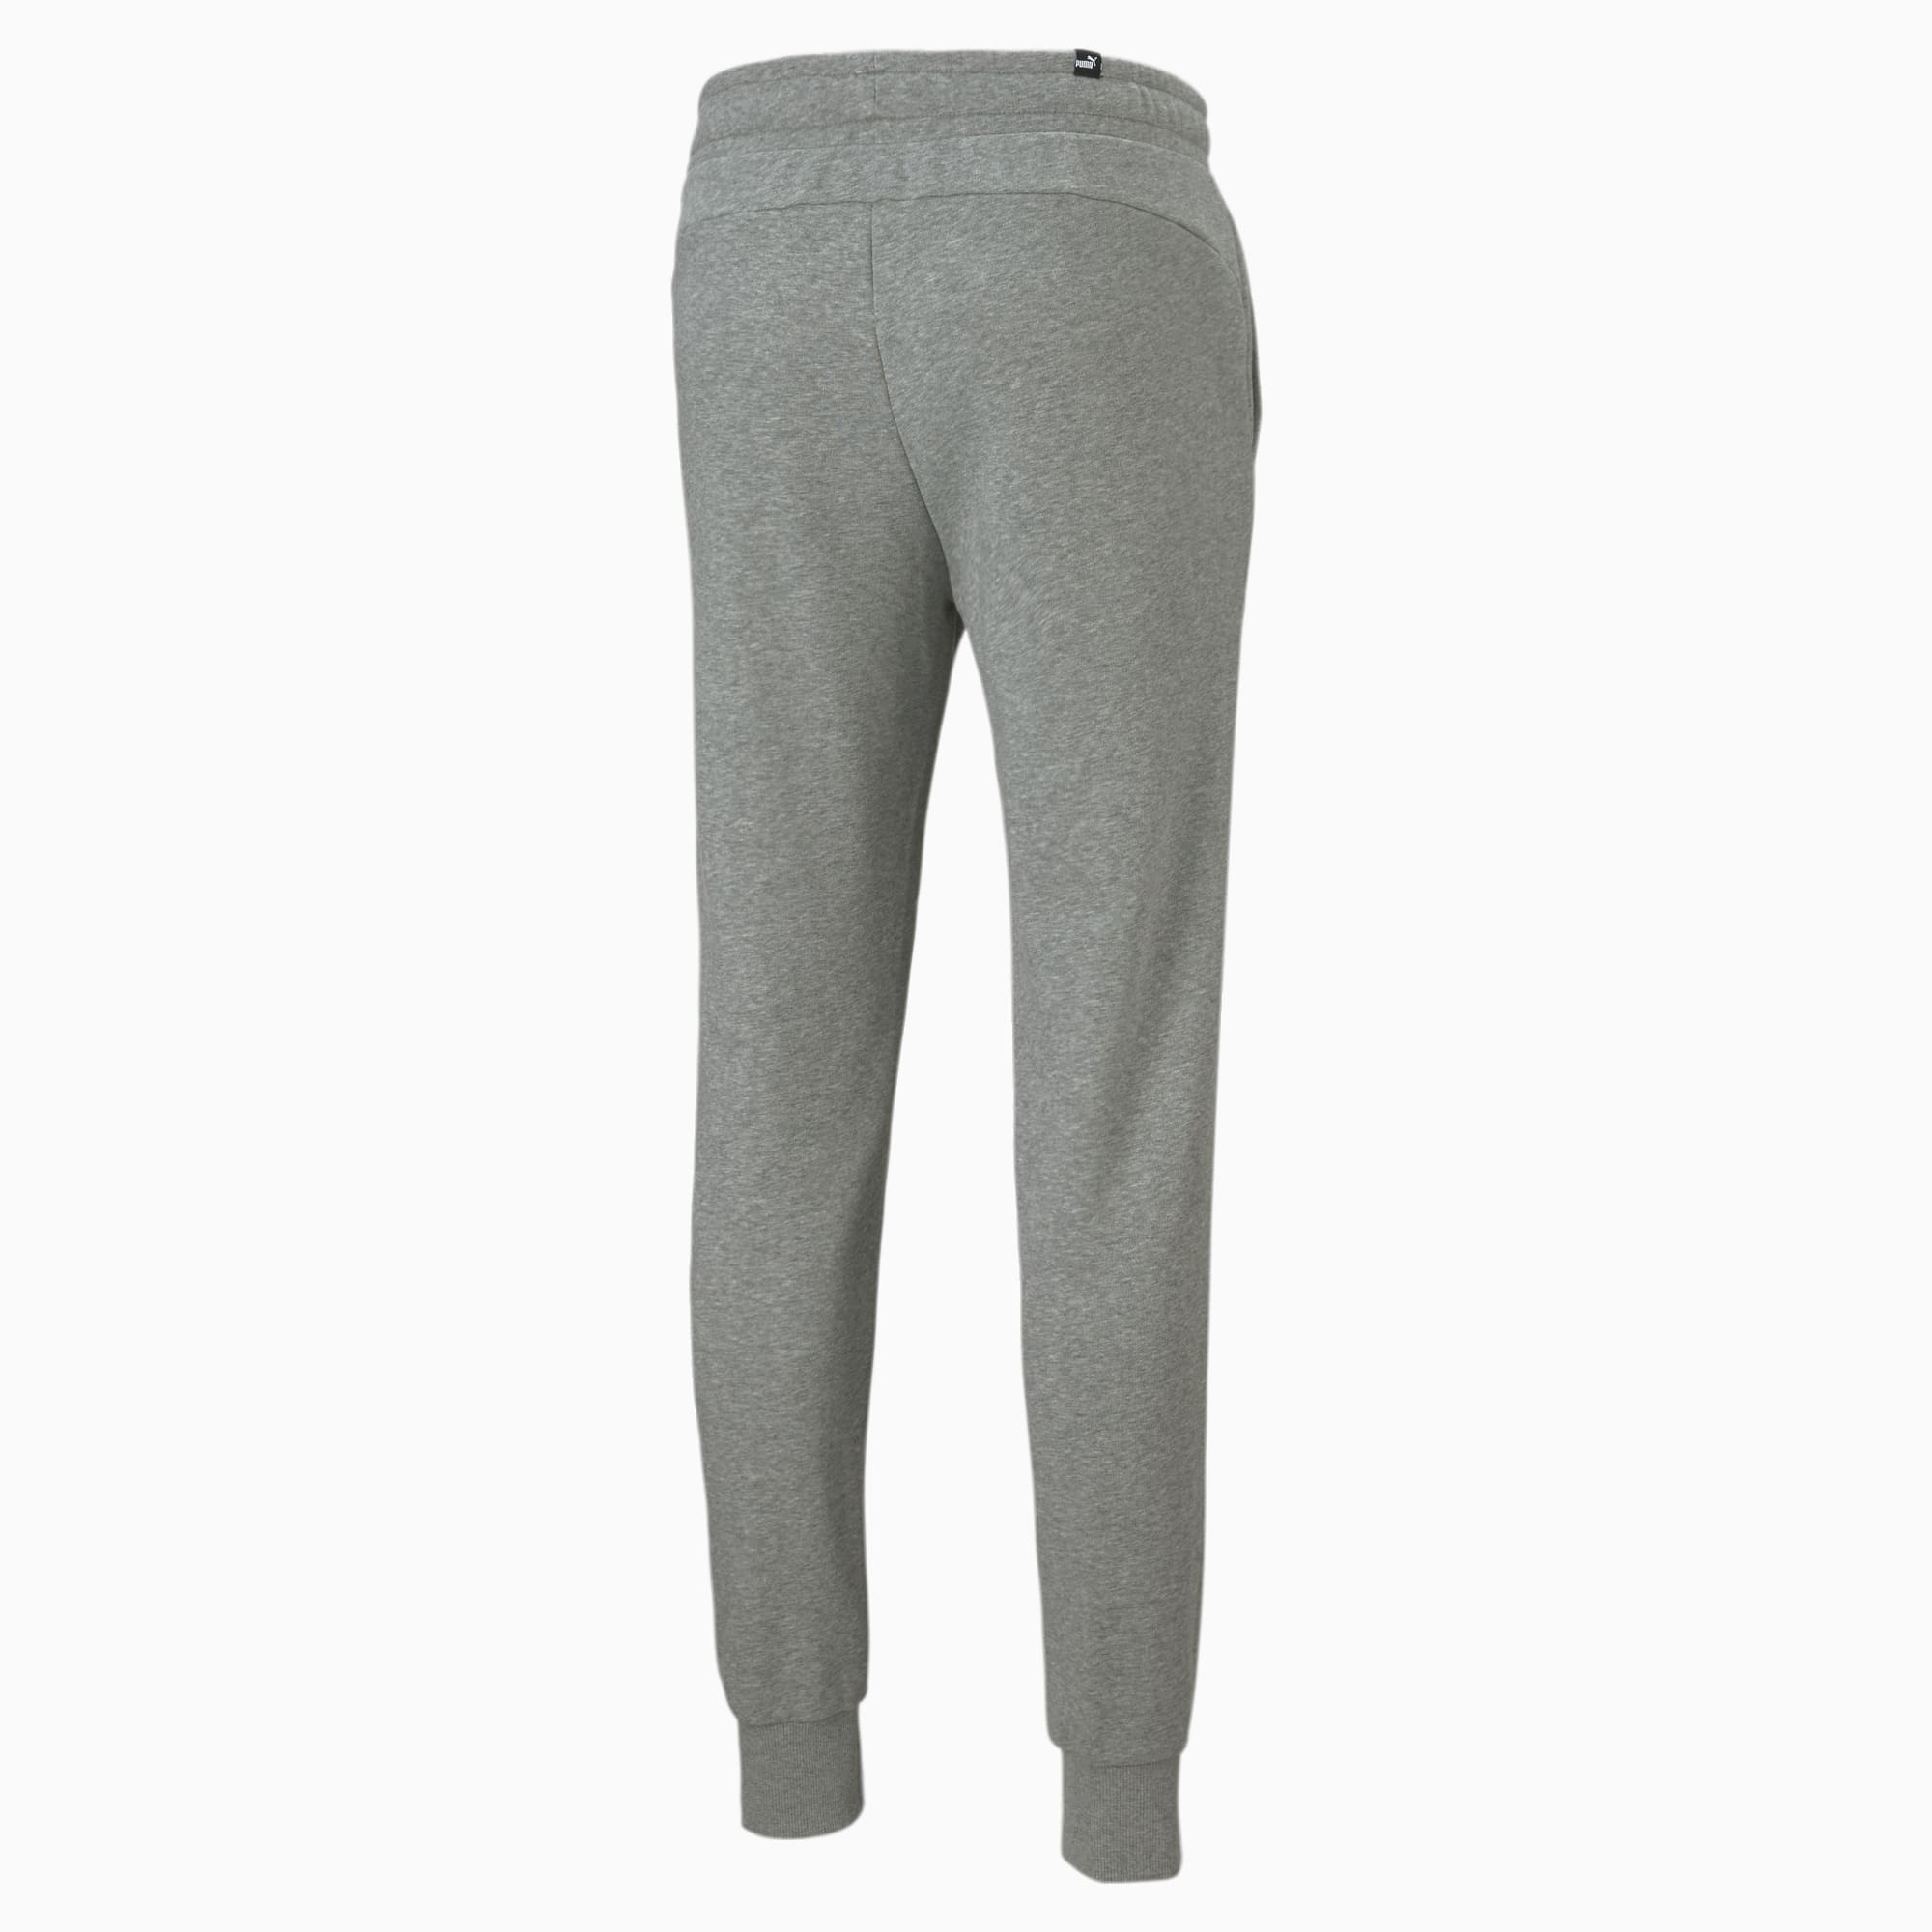 PUMA Essentials Slim Men's Pants, Medium Grey Heather, Size XL, Clothing